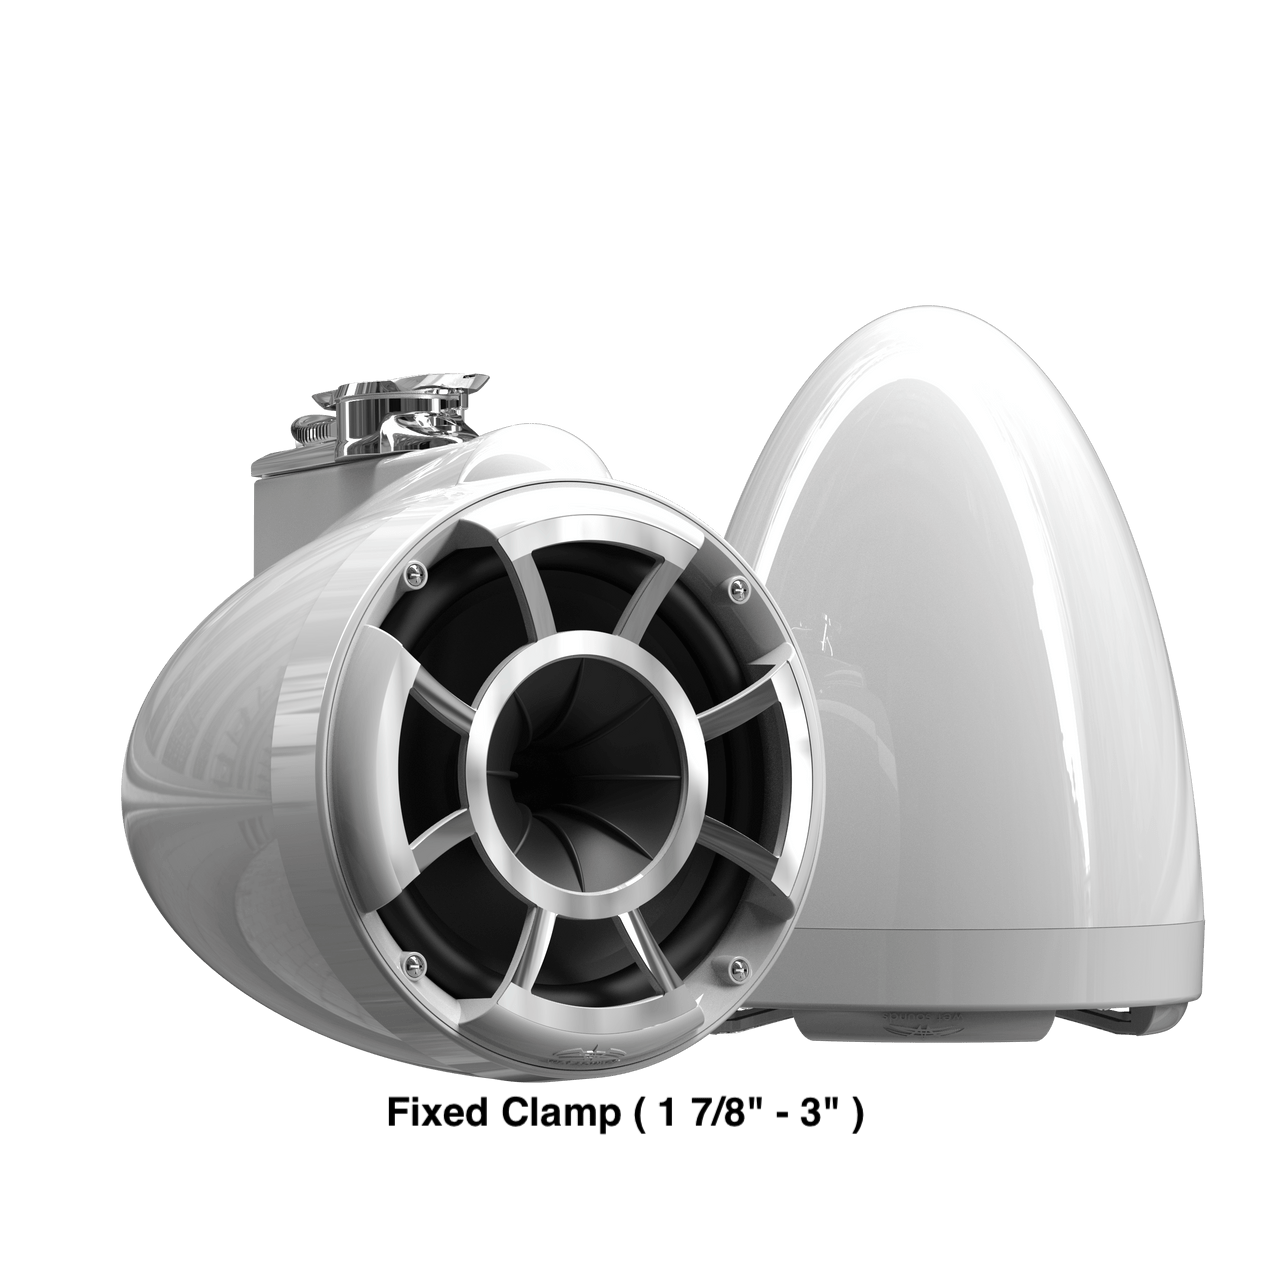 Wet Sounds Boat Wake Tower Speakers Fixed Clamp ( 1 7/8" - 3" ) Wet Sounds REV8™ White V2 | Revolution Series 8" White Tower Speakers